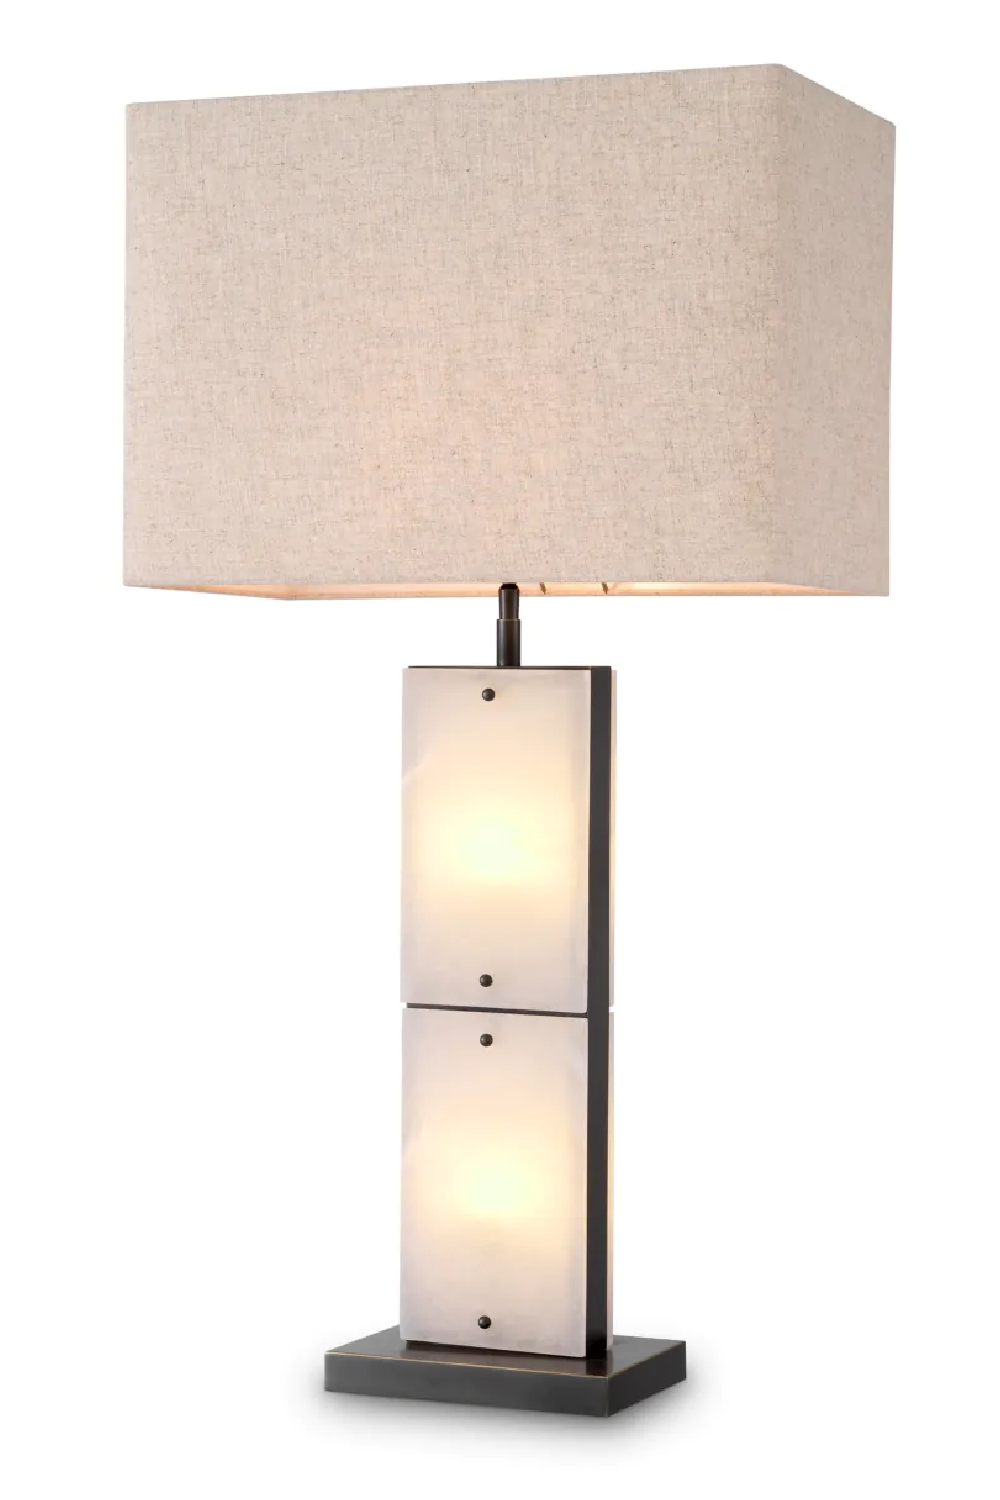 Image of Linen Modern Table Lamp | Eichholtz Ortiz